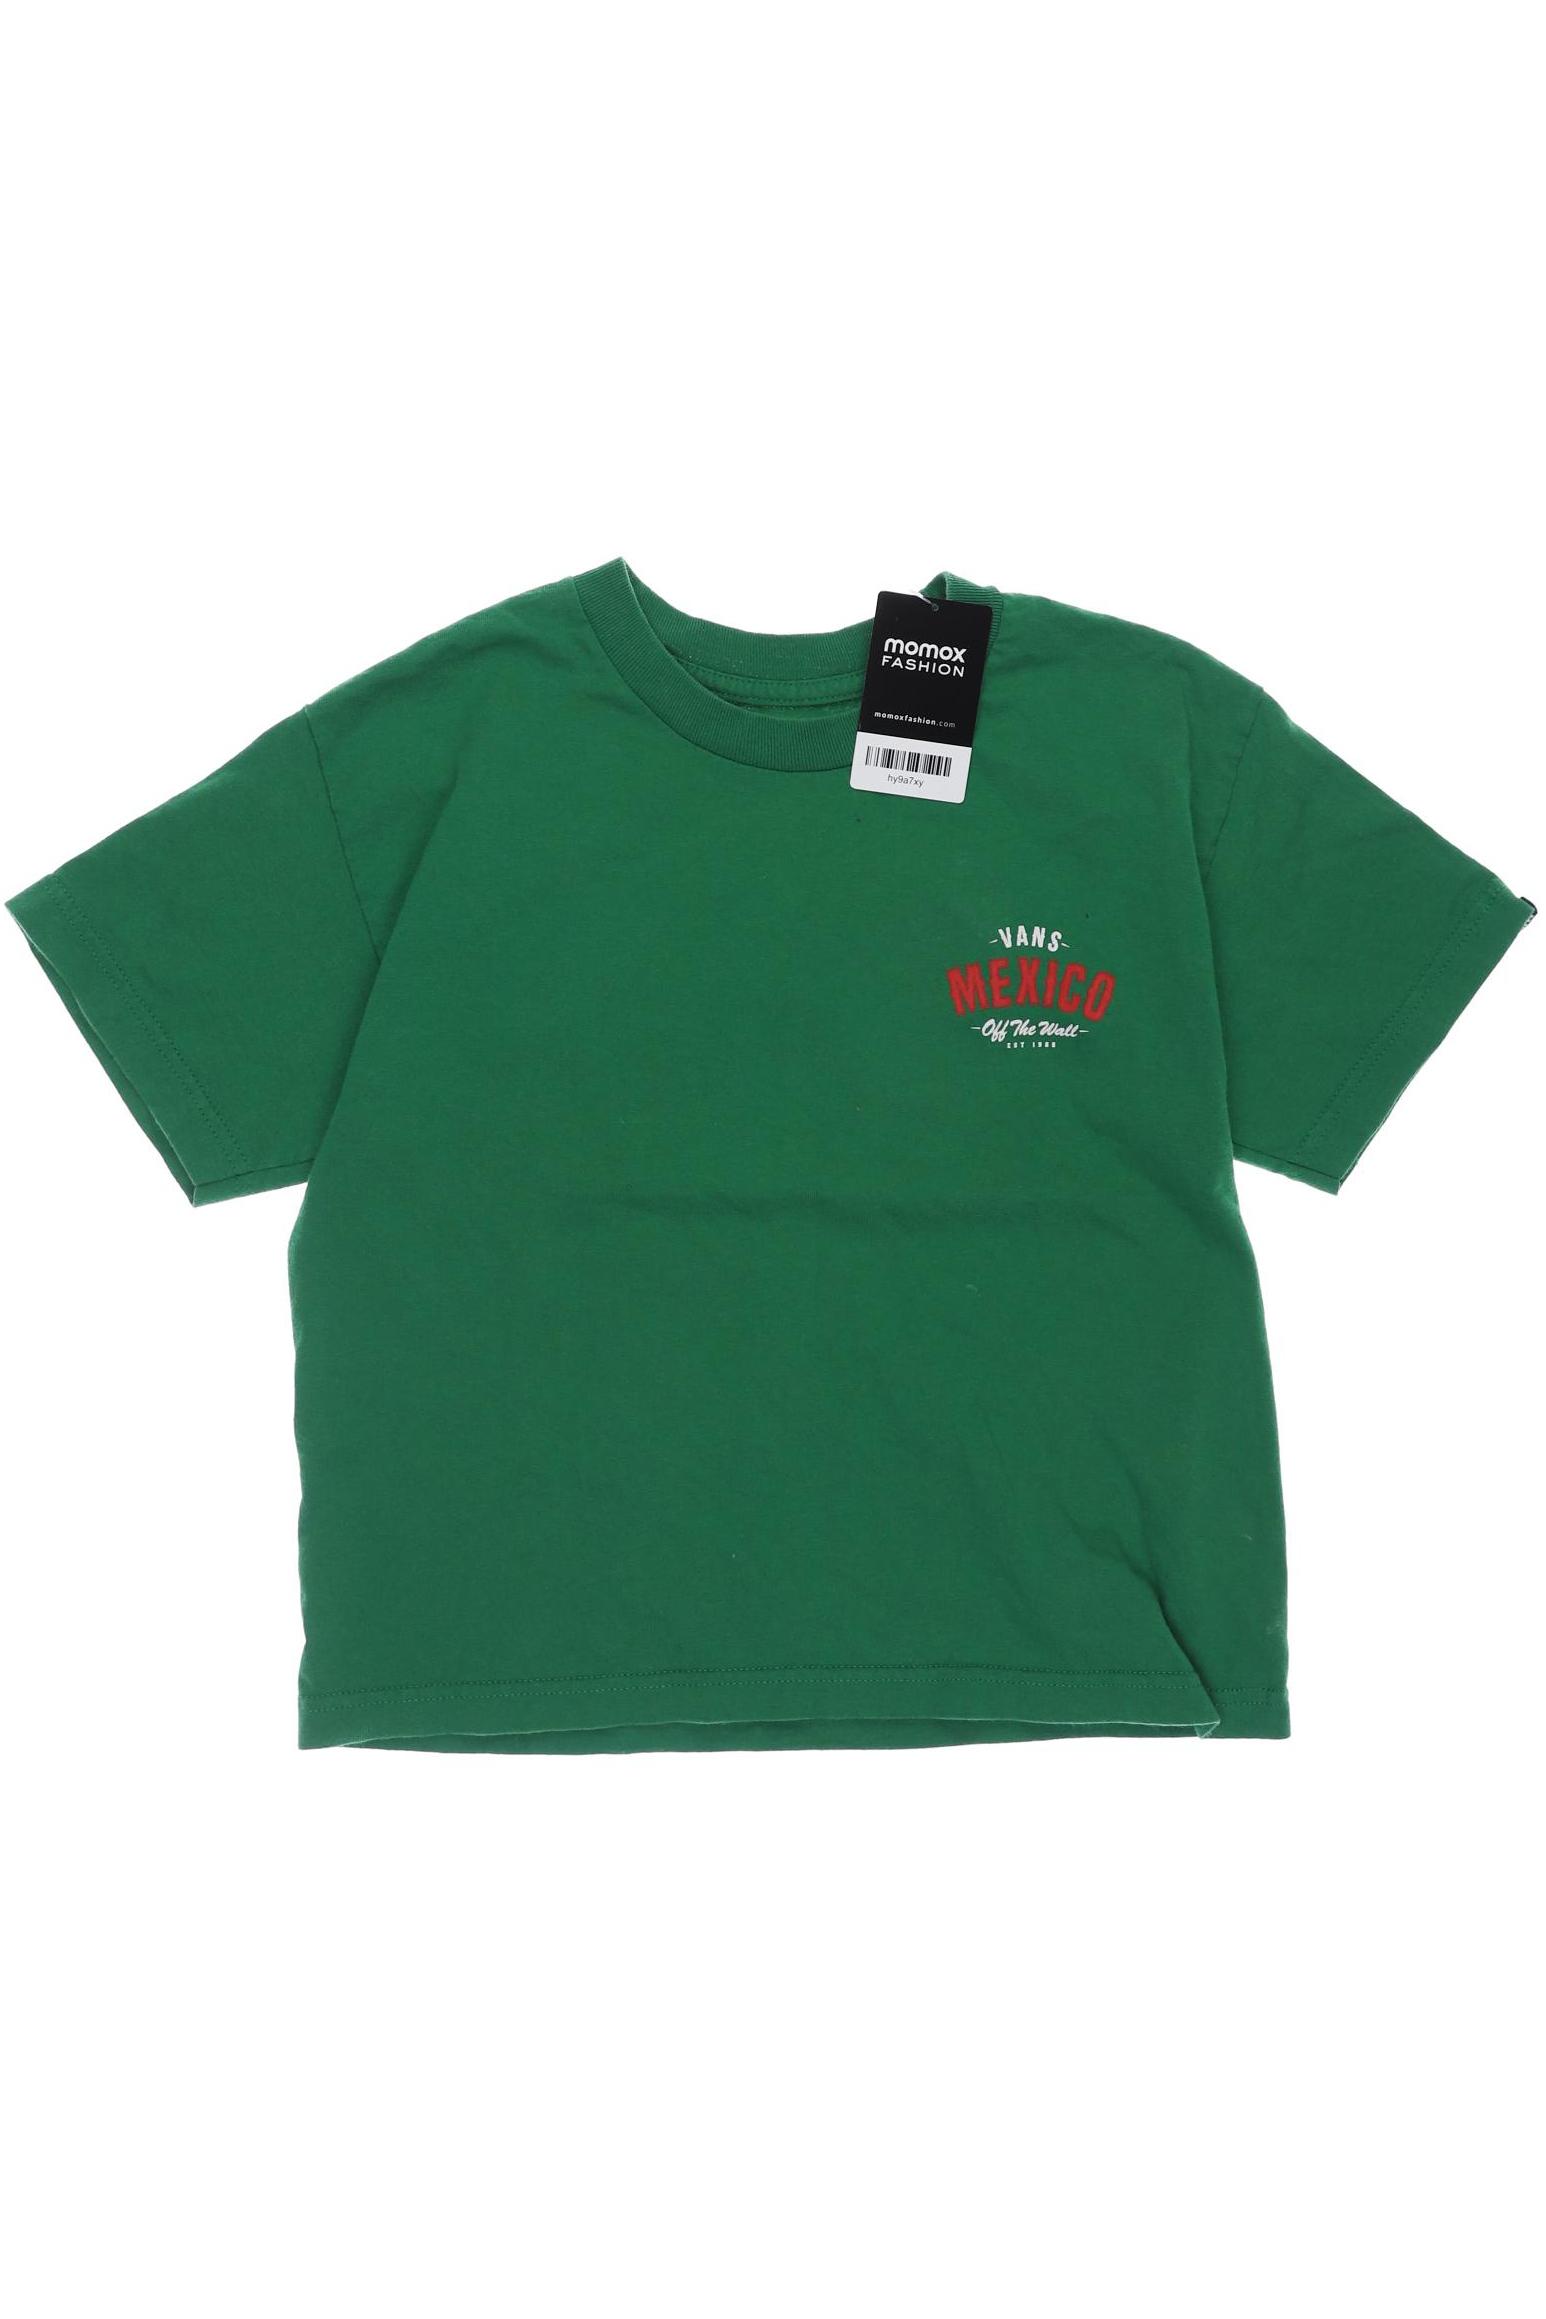 VANS Jungen T-Shirt, grün von Vans